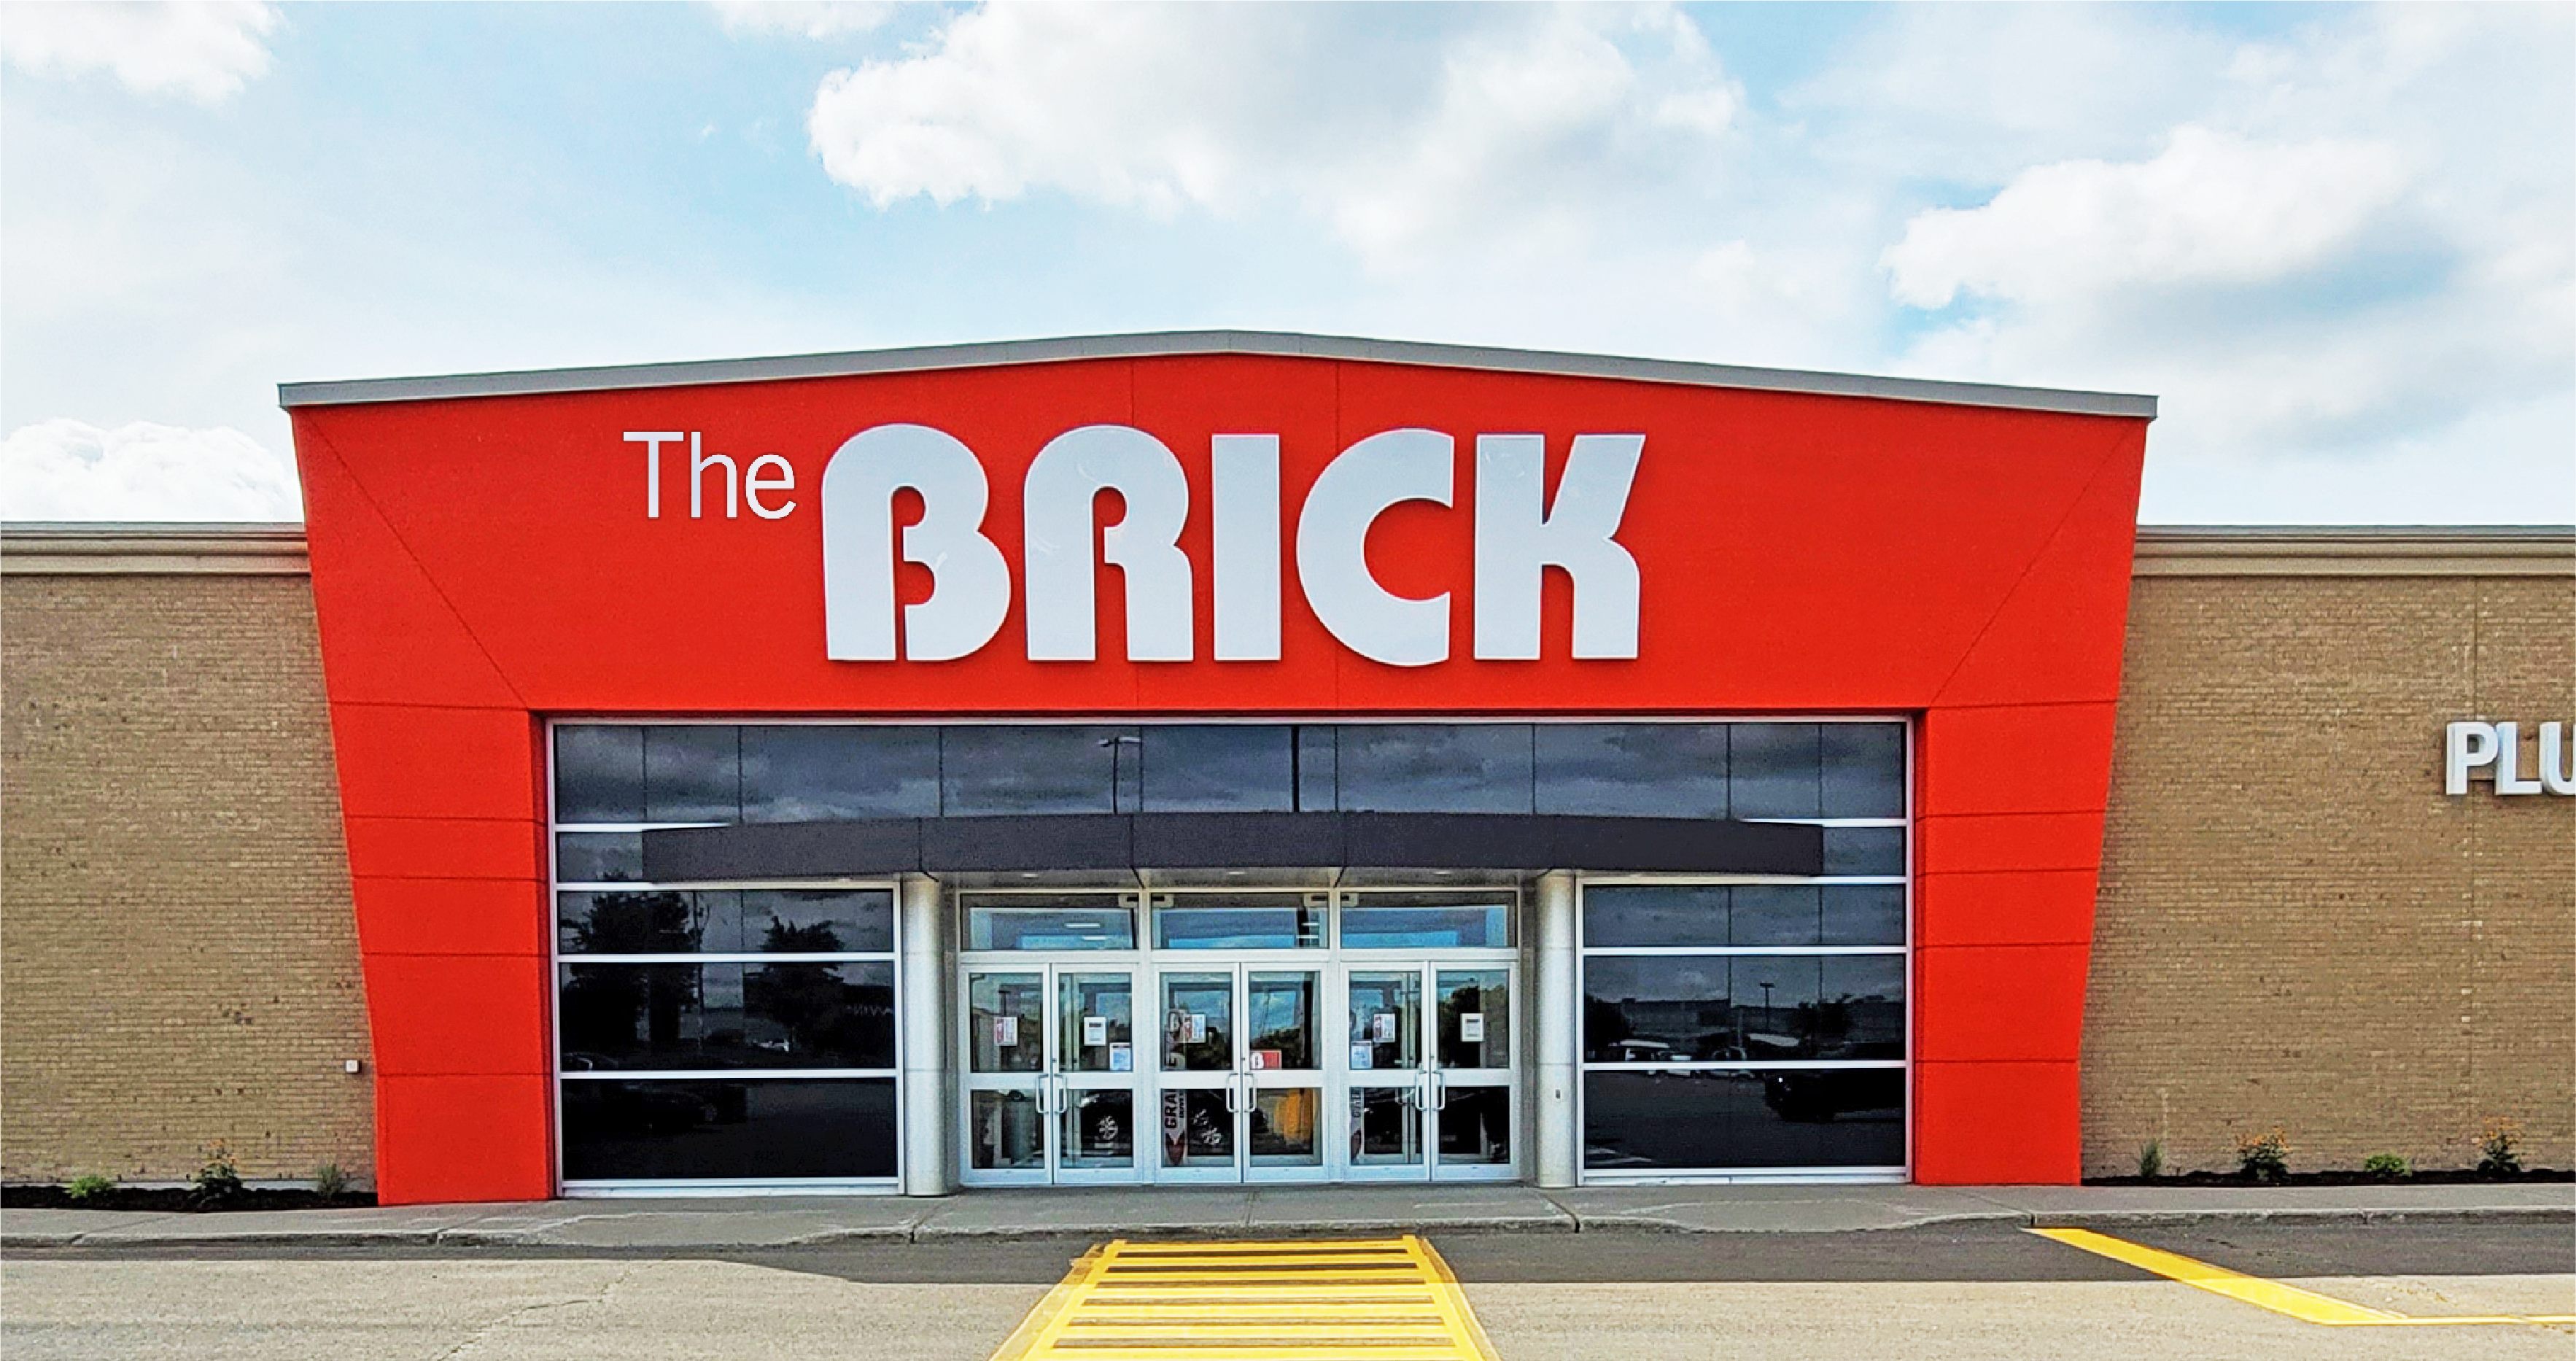  The Brick Franchise Store Image